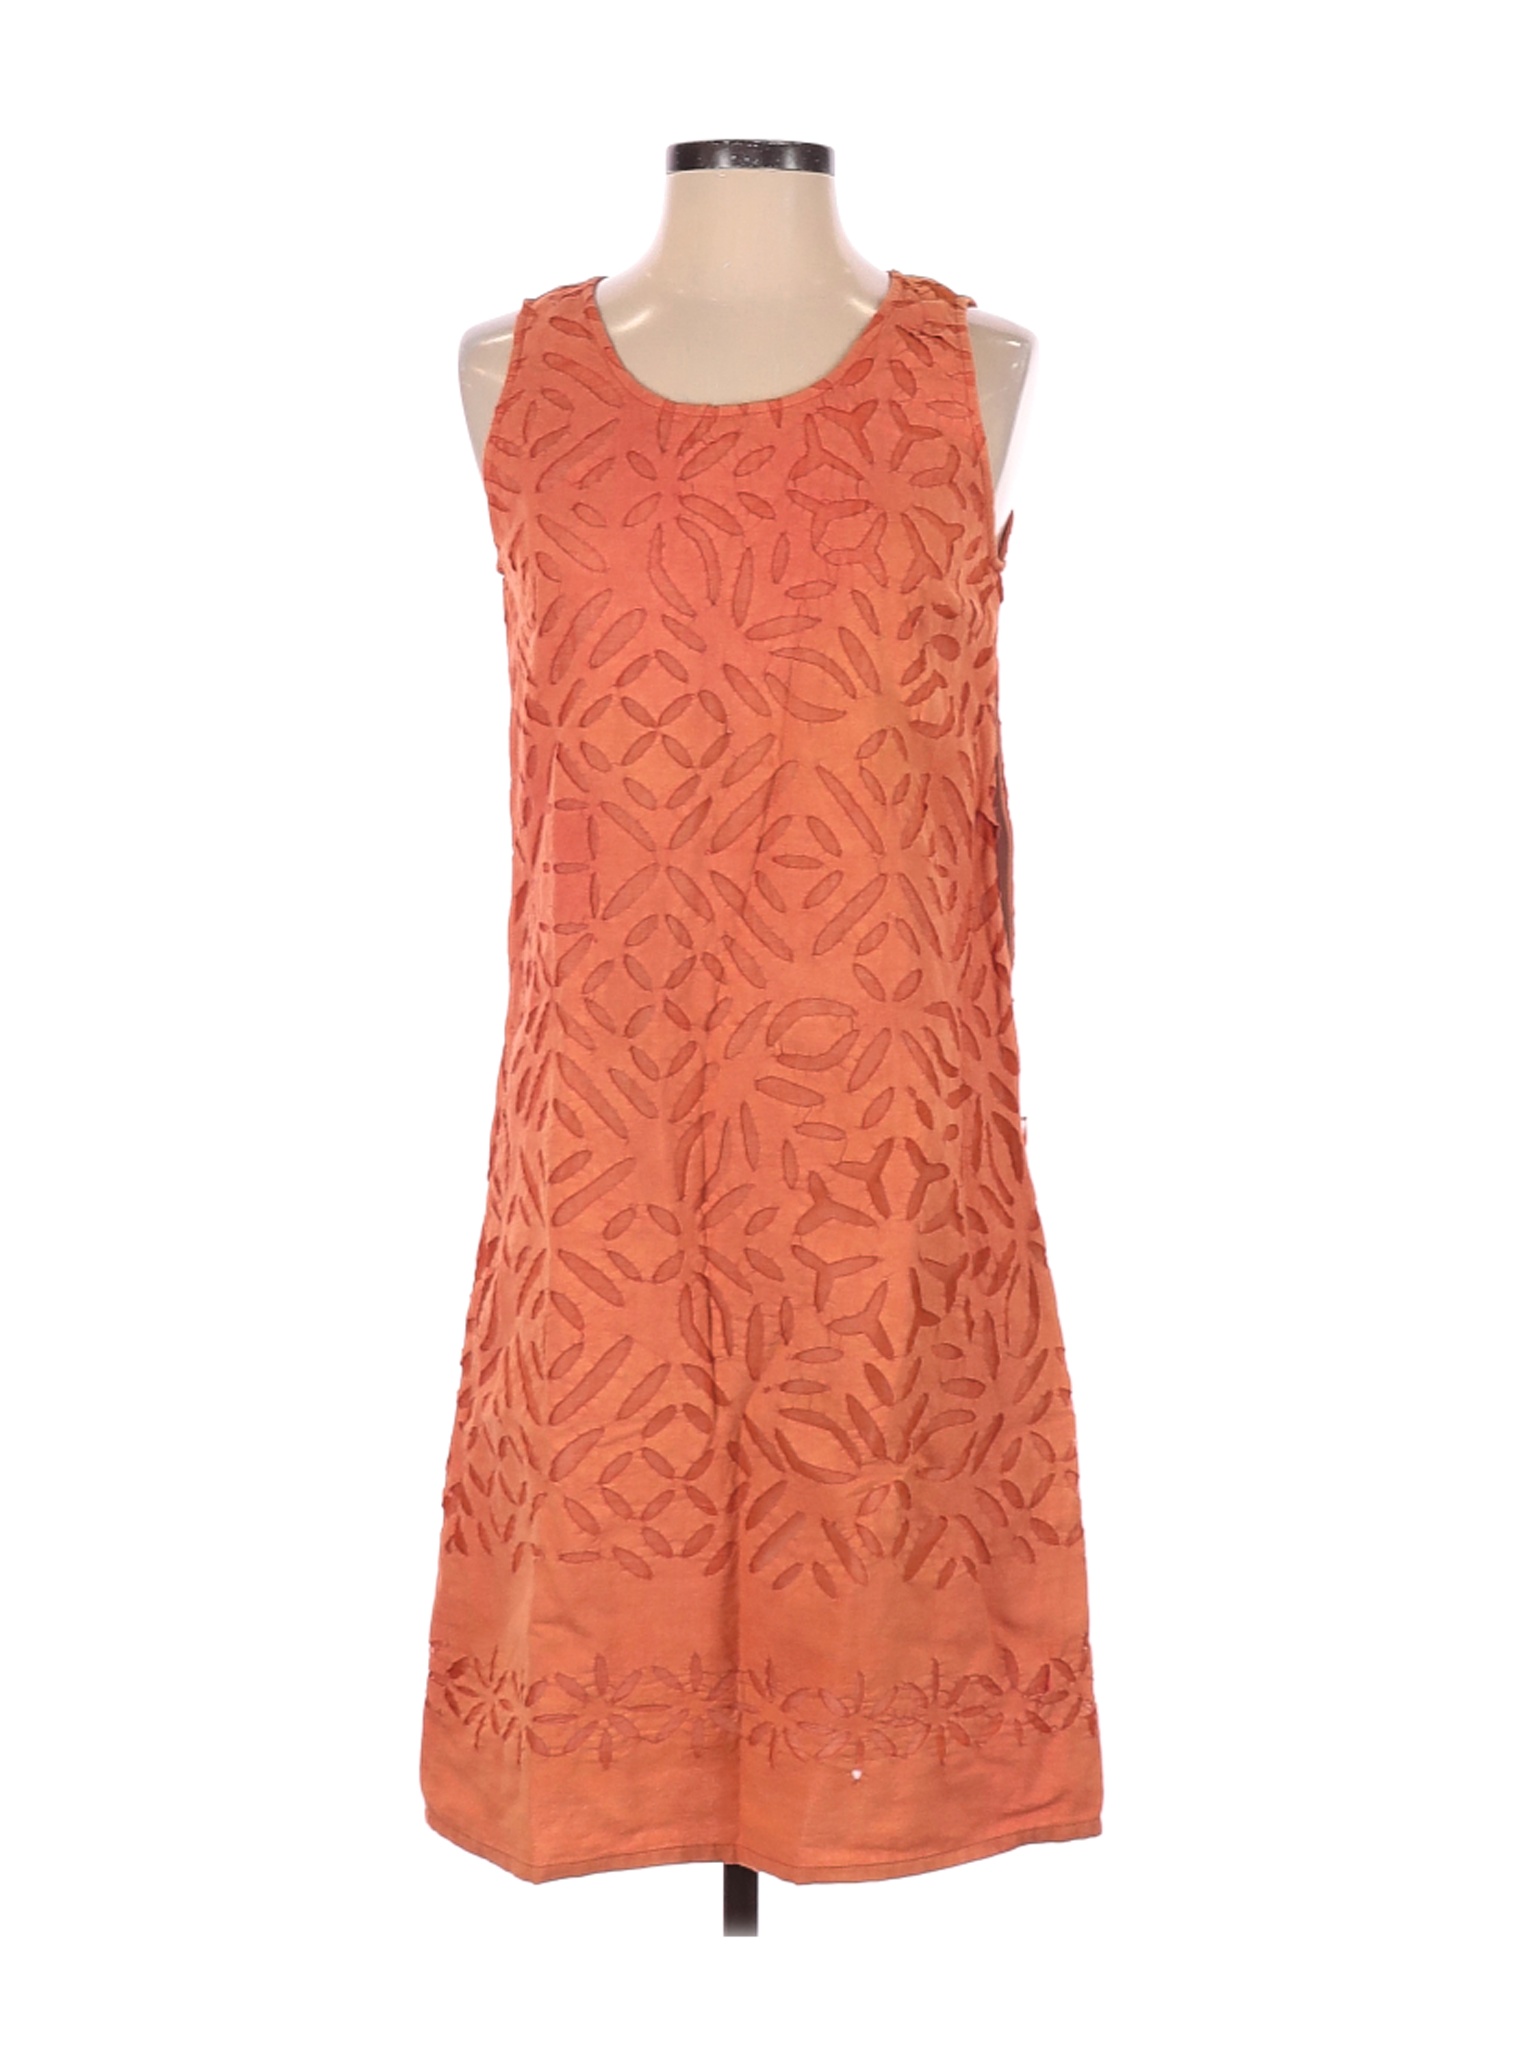 Roberta Freymann Women Orange Casual Dress XS | eBay